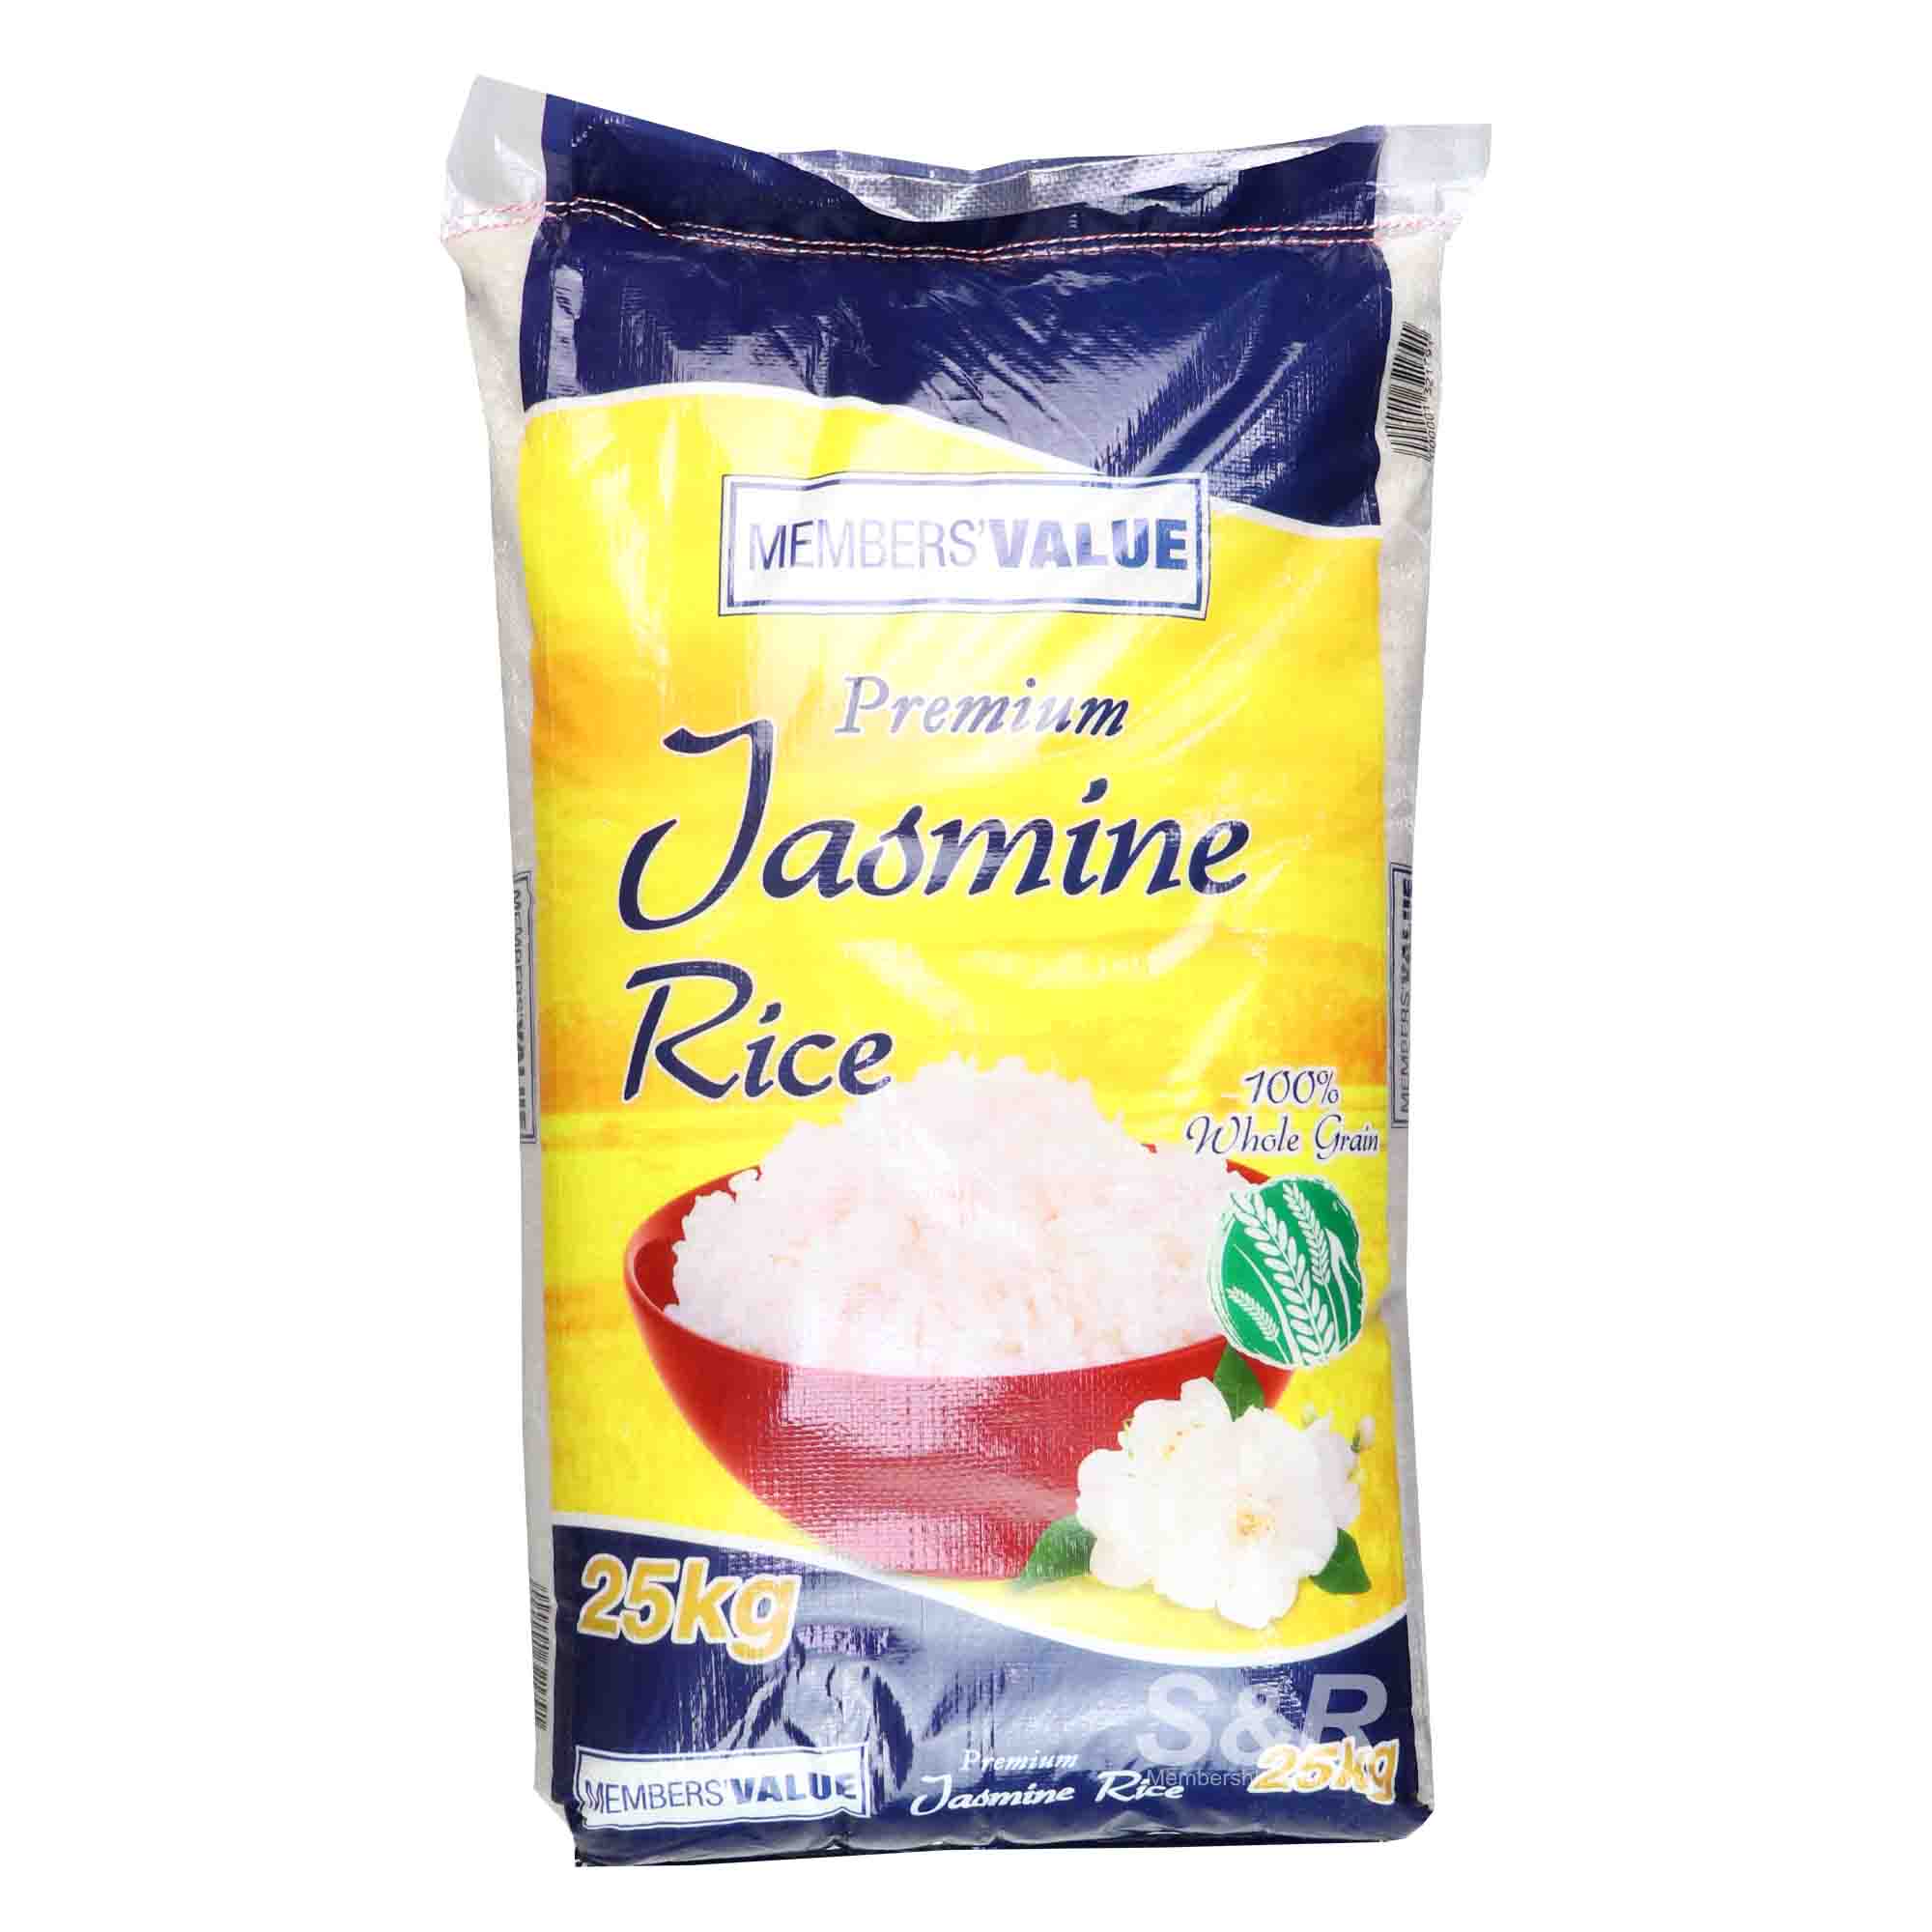 Members' Value  Jasmine Premium 100% Whole Grain Rice 25kg